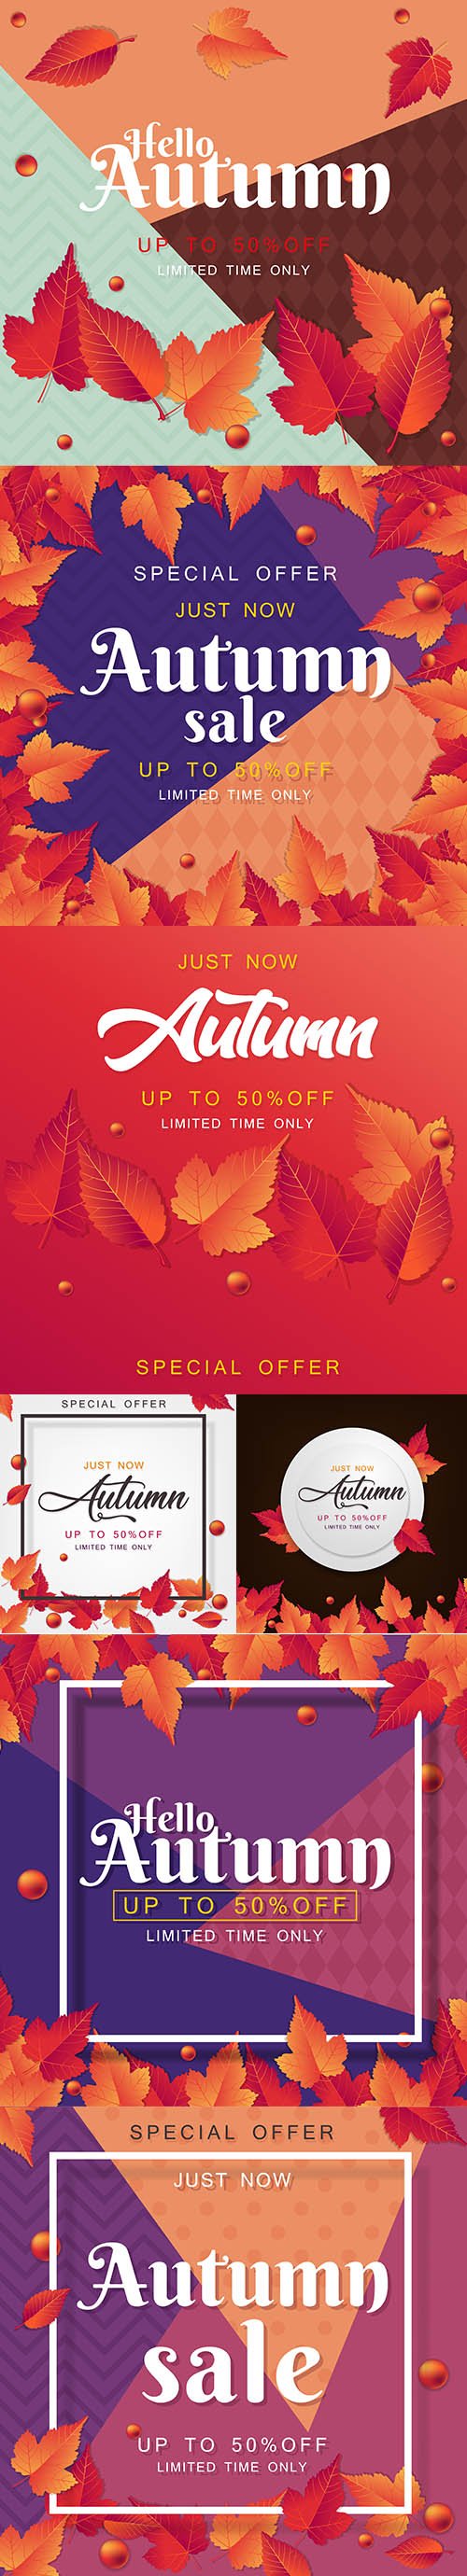 Autumn Sale Vector Illustrations Set